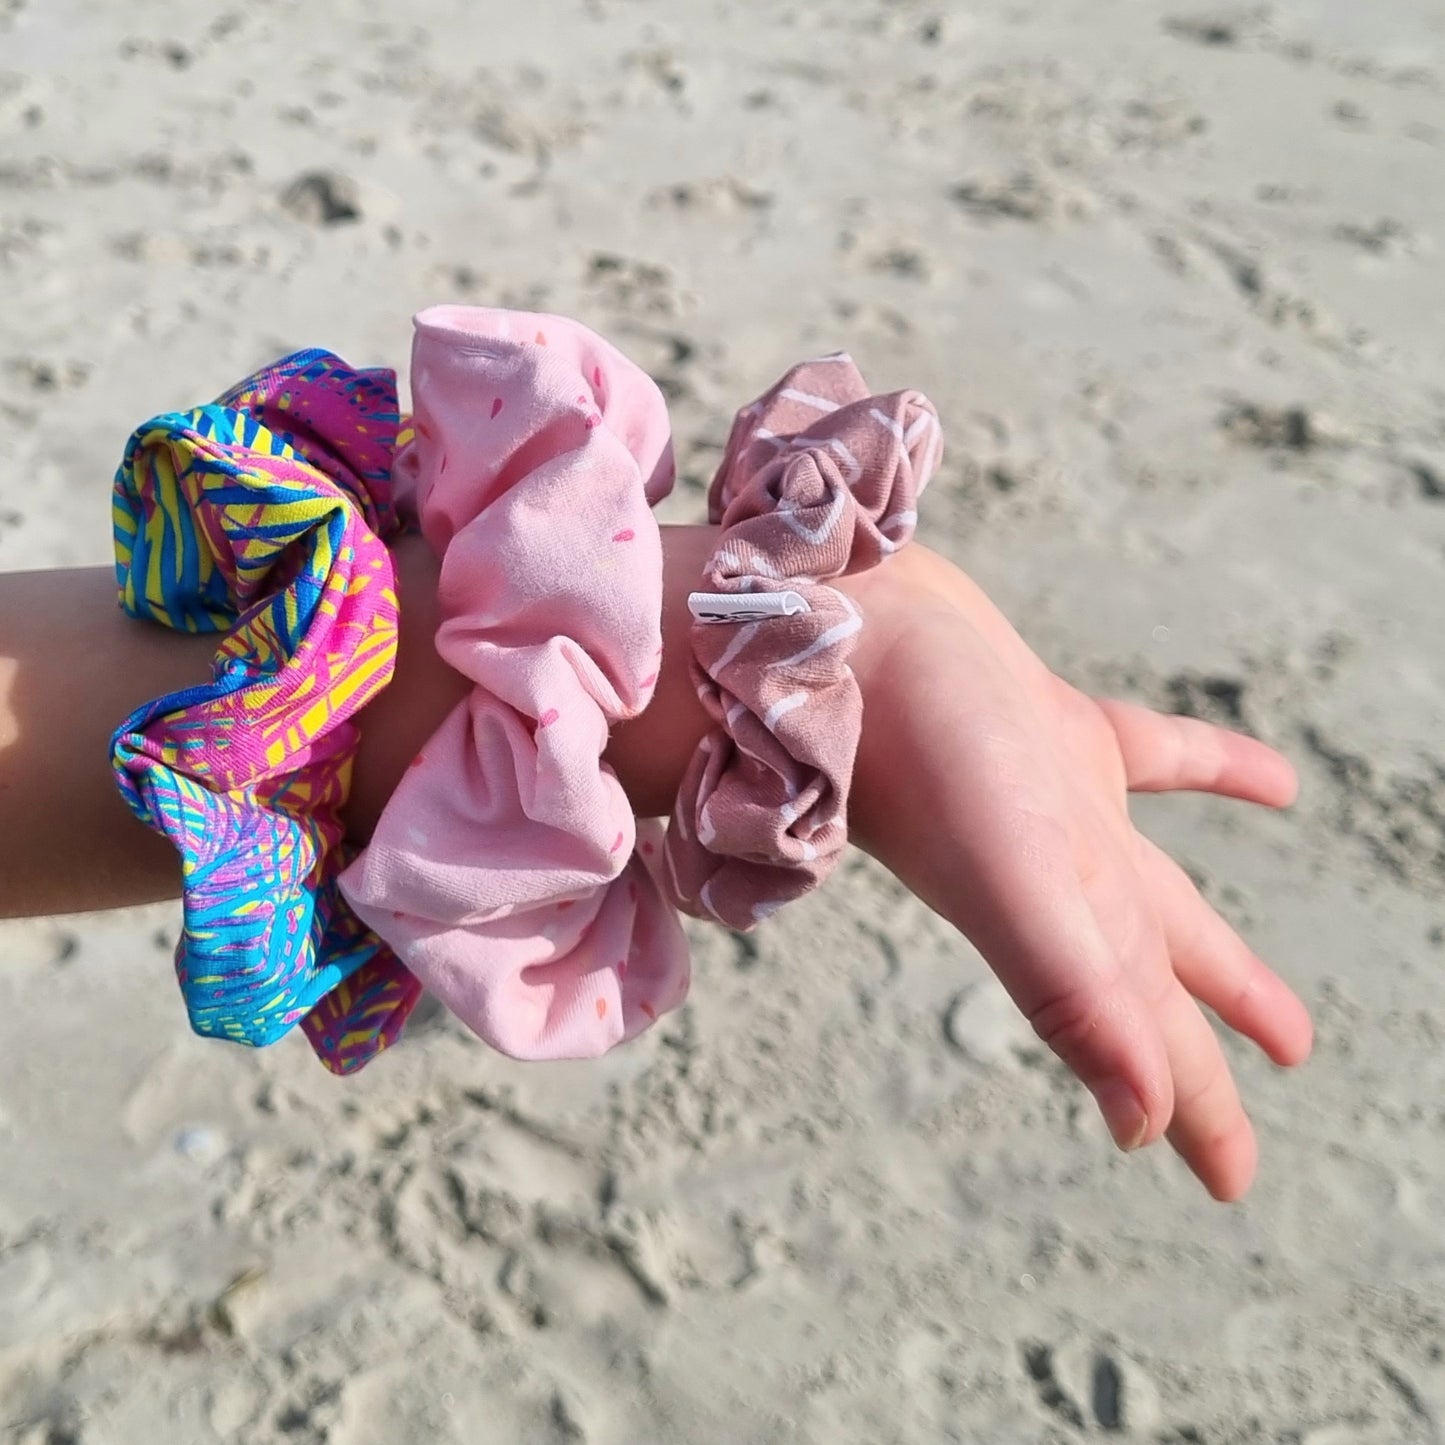 Scrunchie - Pink Sprinkle on girls wrist at the beach. Pink sprinkle design on pink background.